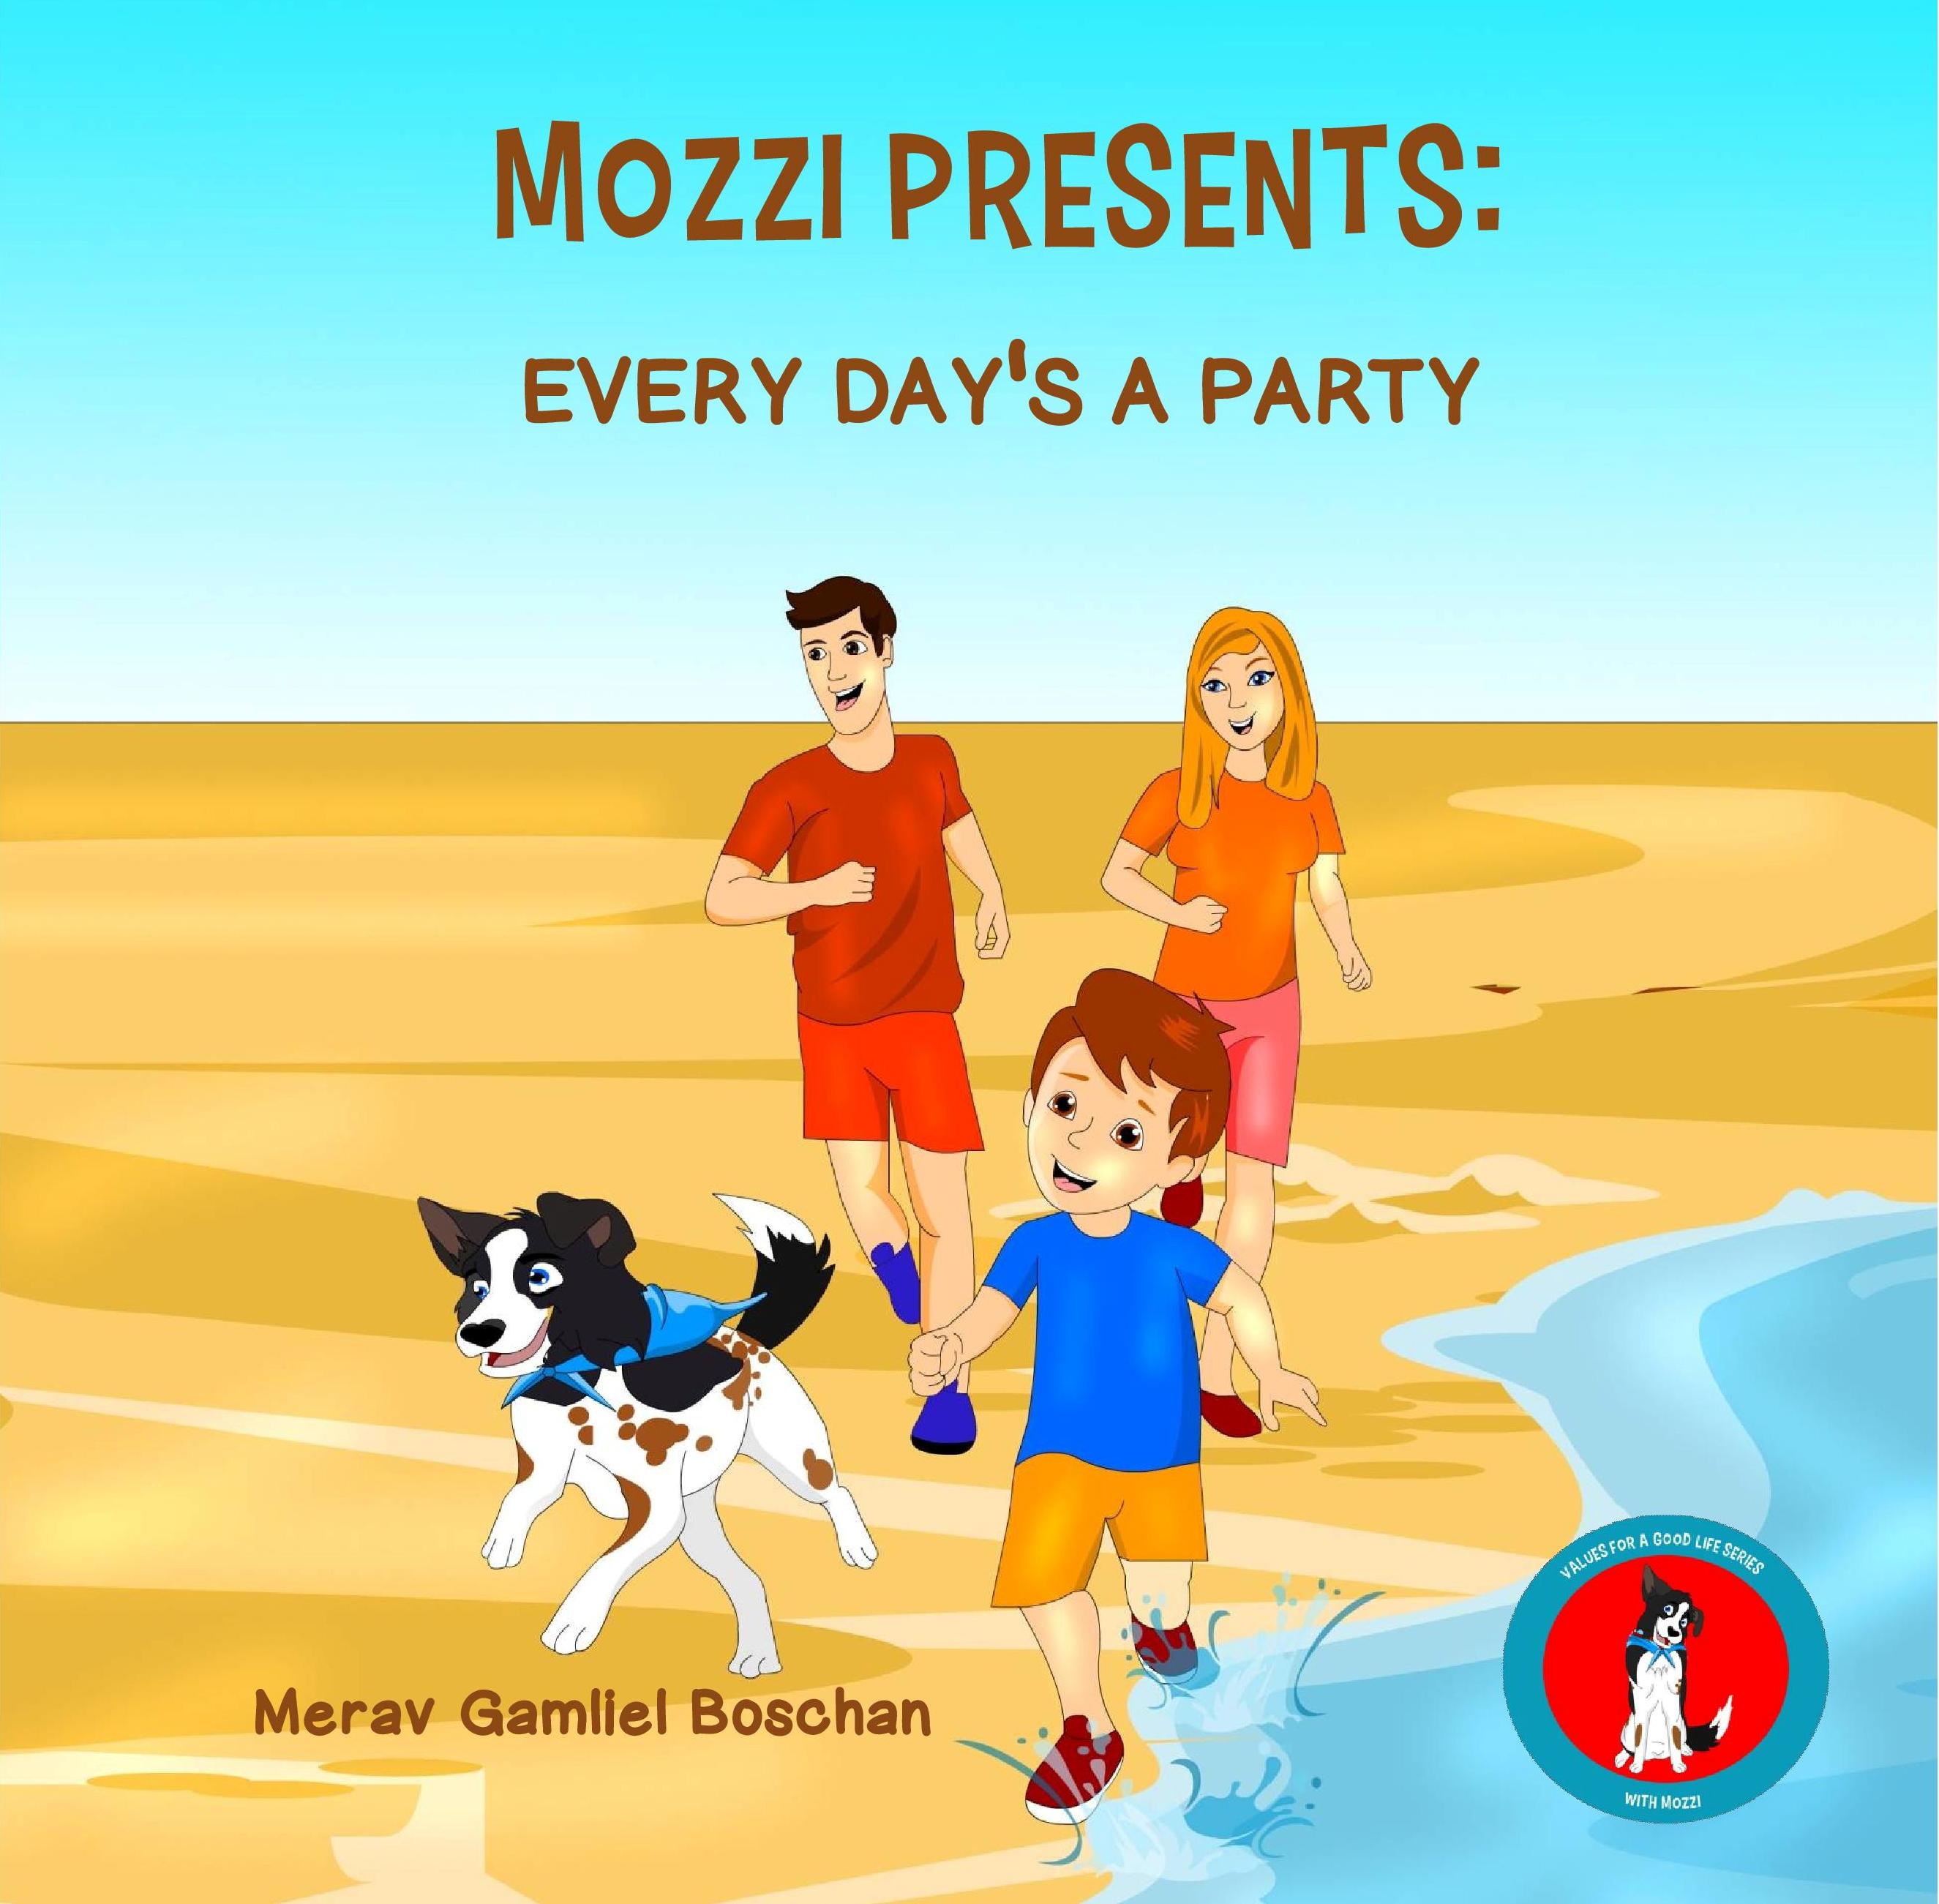 FREE: MOZZI PRESENTS: EVERY DAY’S A PARTY by Merav Gamliel Boschan